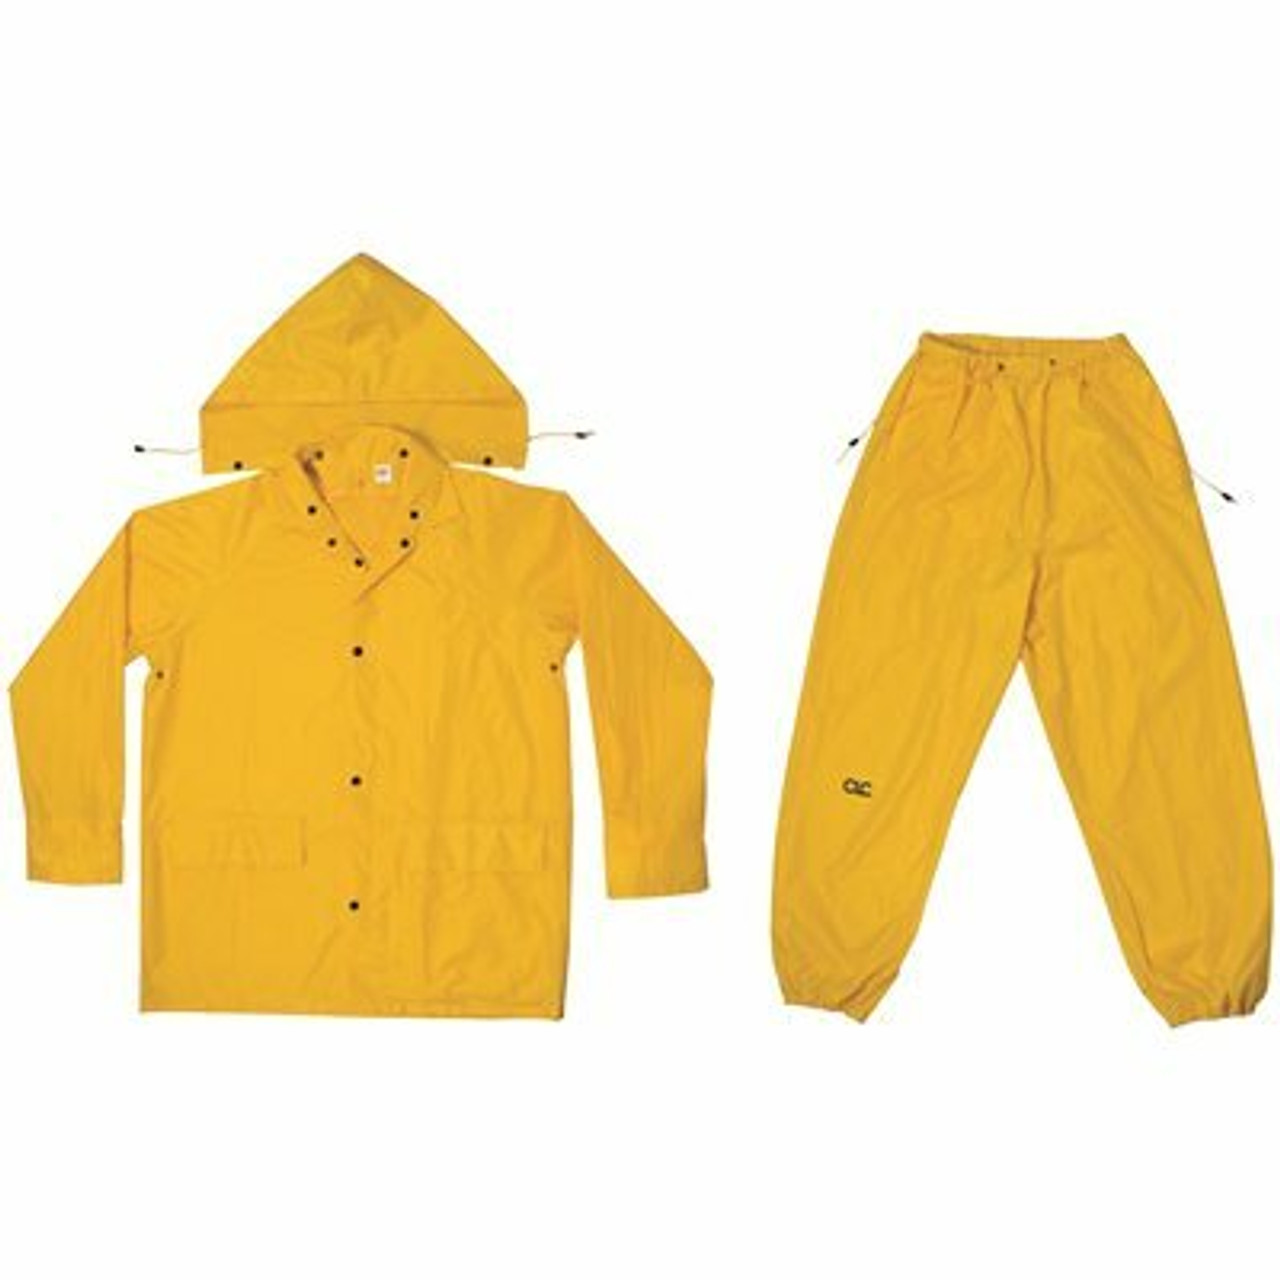 Clc Unisex 2X-Large Yellow 3-Piece Polyester Rain Suit